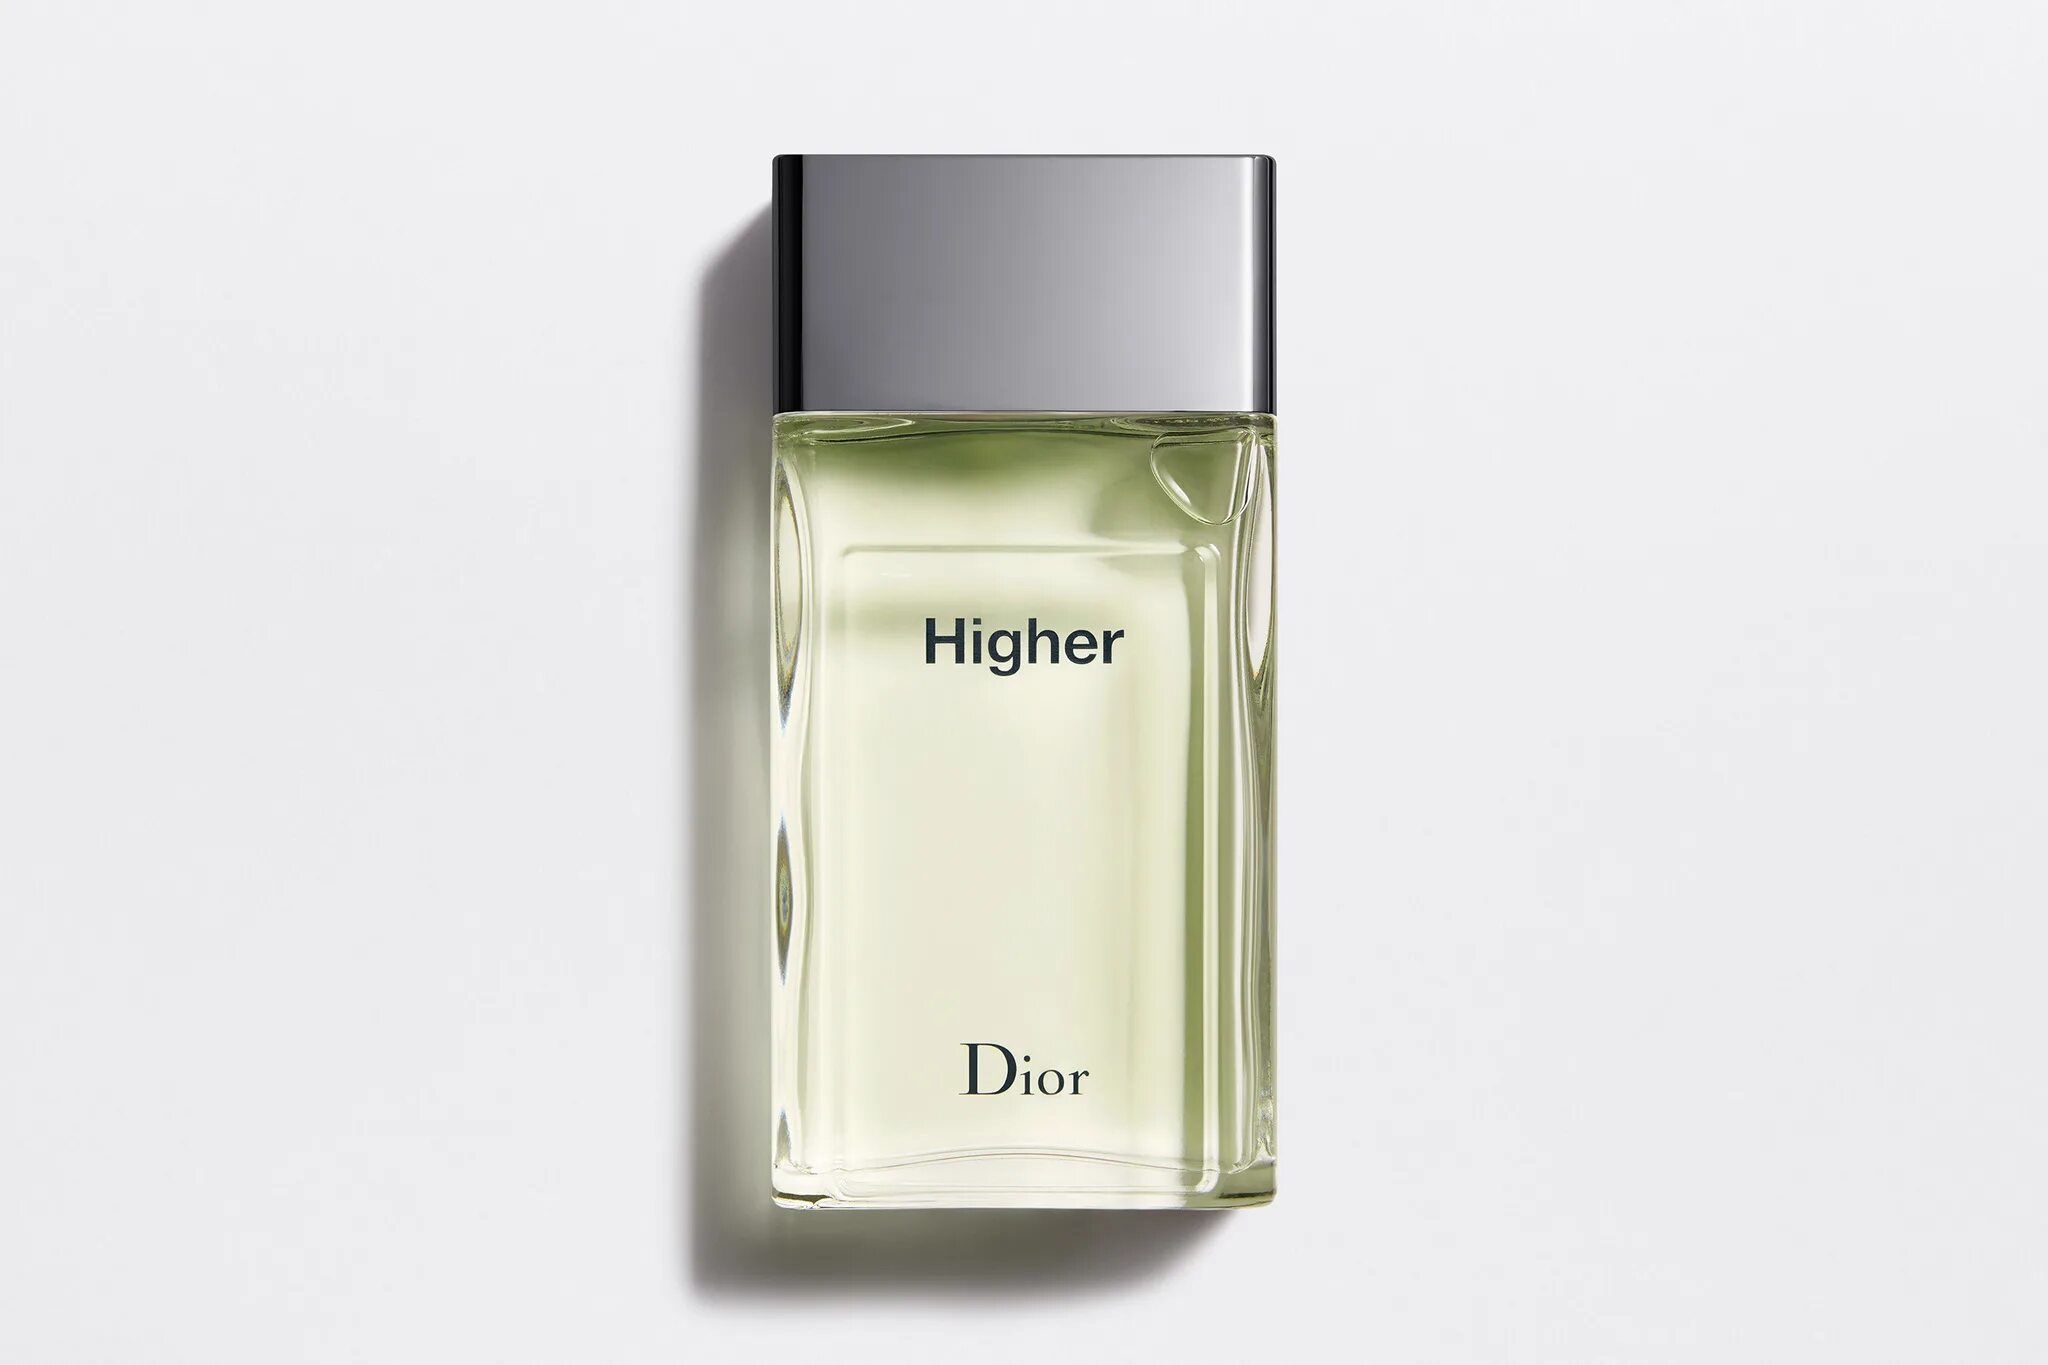 Диор higher Energy. Диор диор Энерджи туалетная вода мужская. Higher Dior 50ml. Dior higher Energy 50 ml.